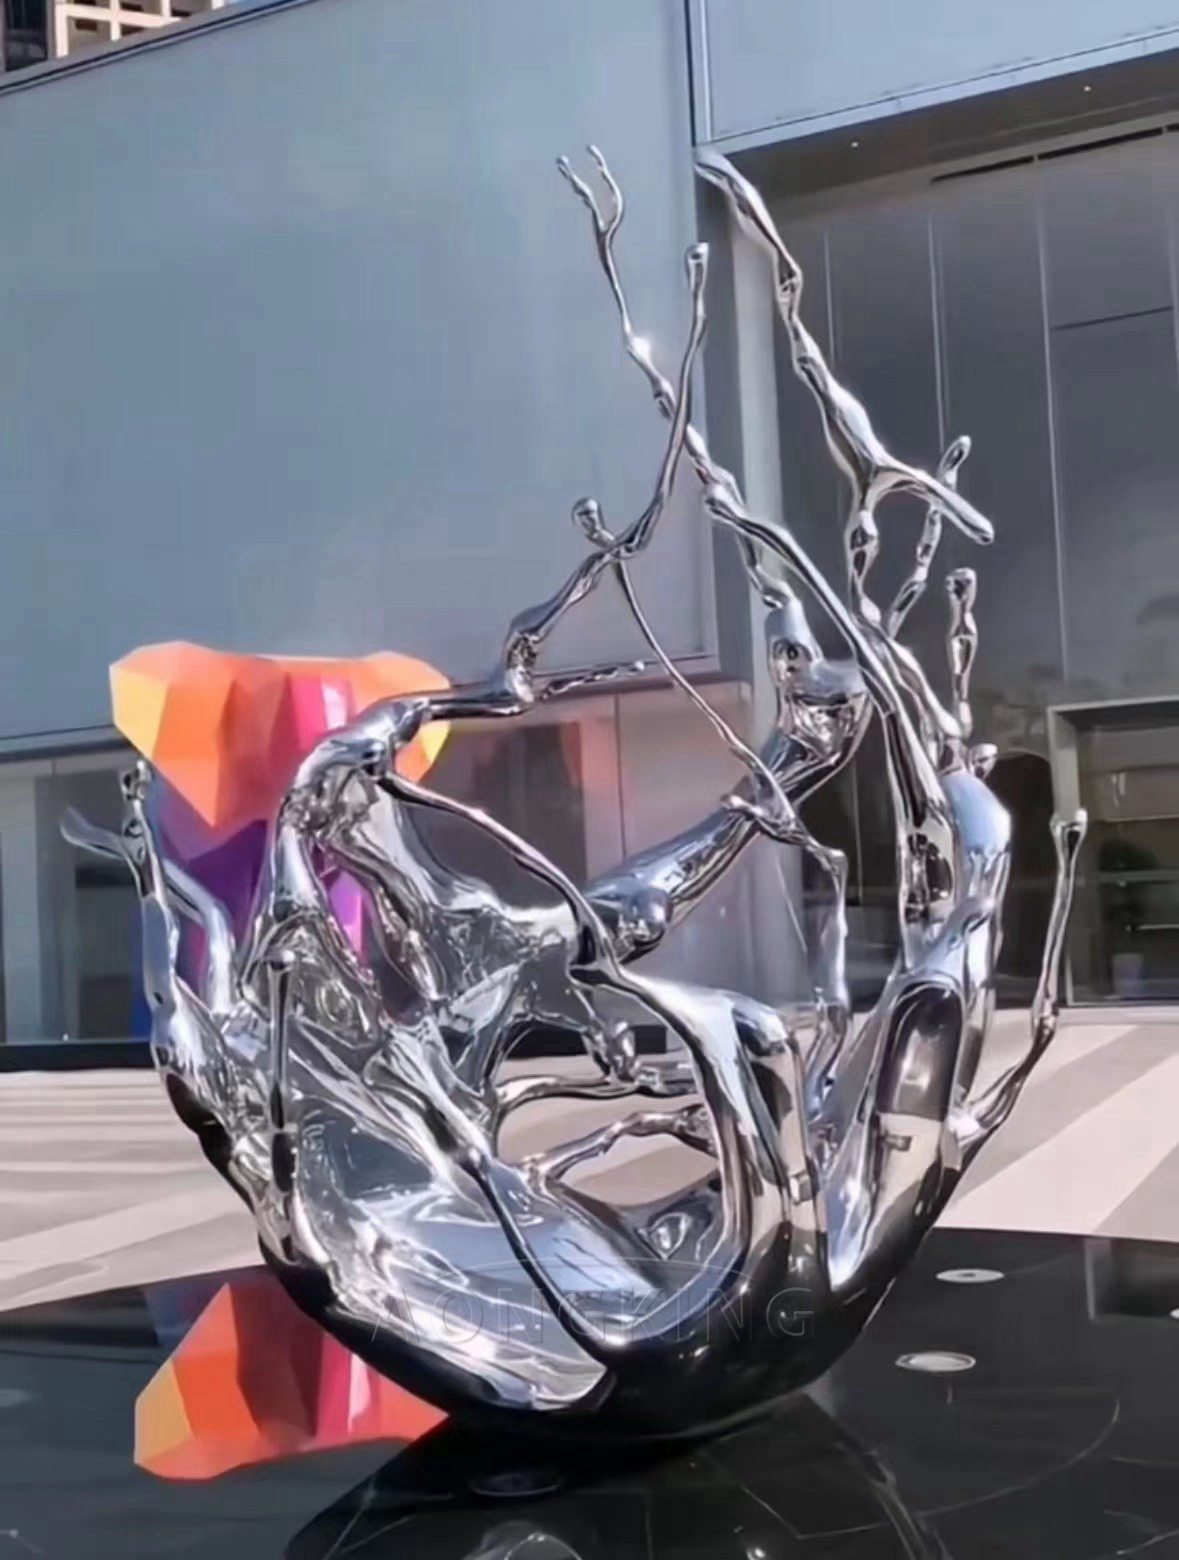 Marine-inspired stainless steel sculptures